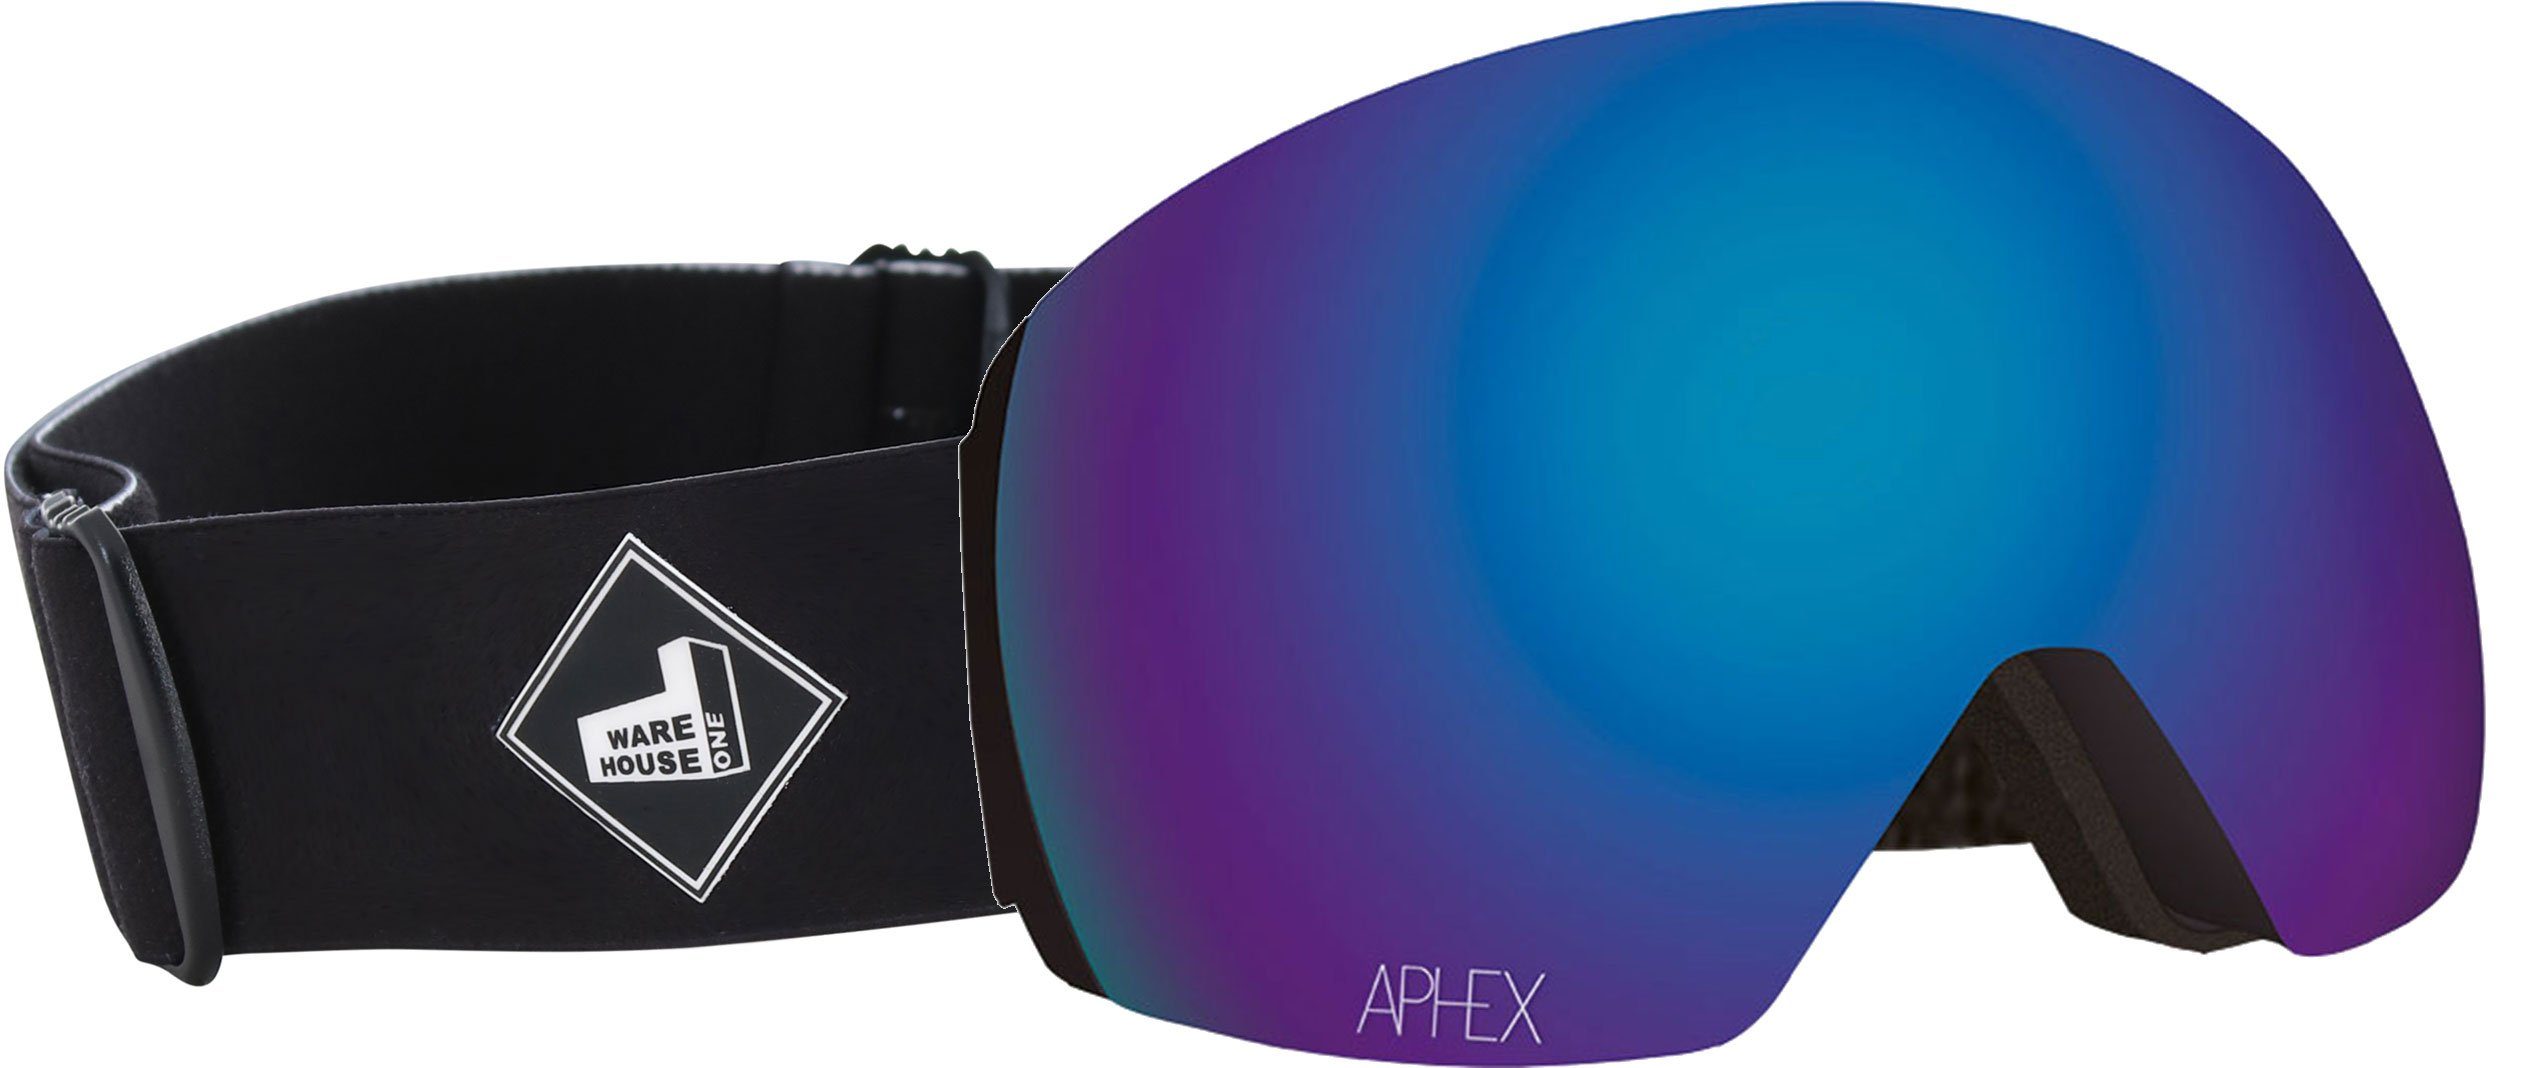 Aphex Snowboardbrille APHEX STYX THE ONE EDITION Magnet Schneebrille black strap +Glas